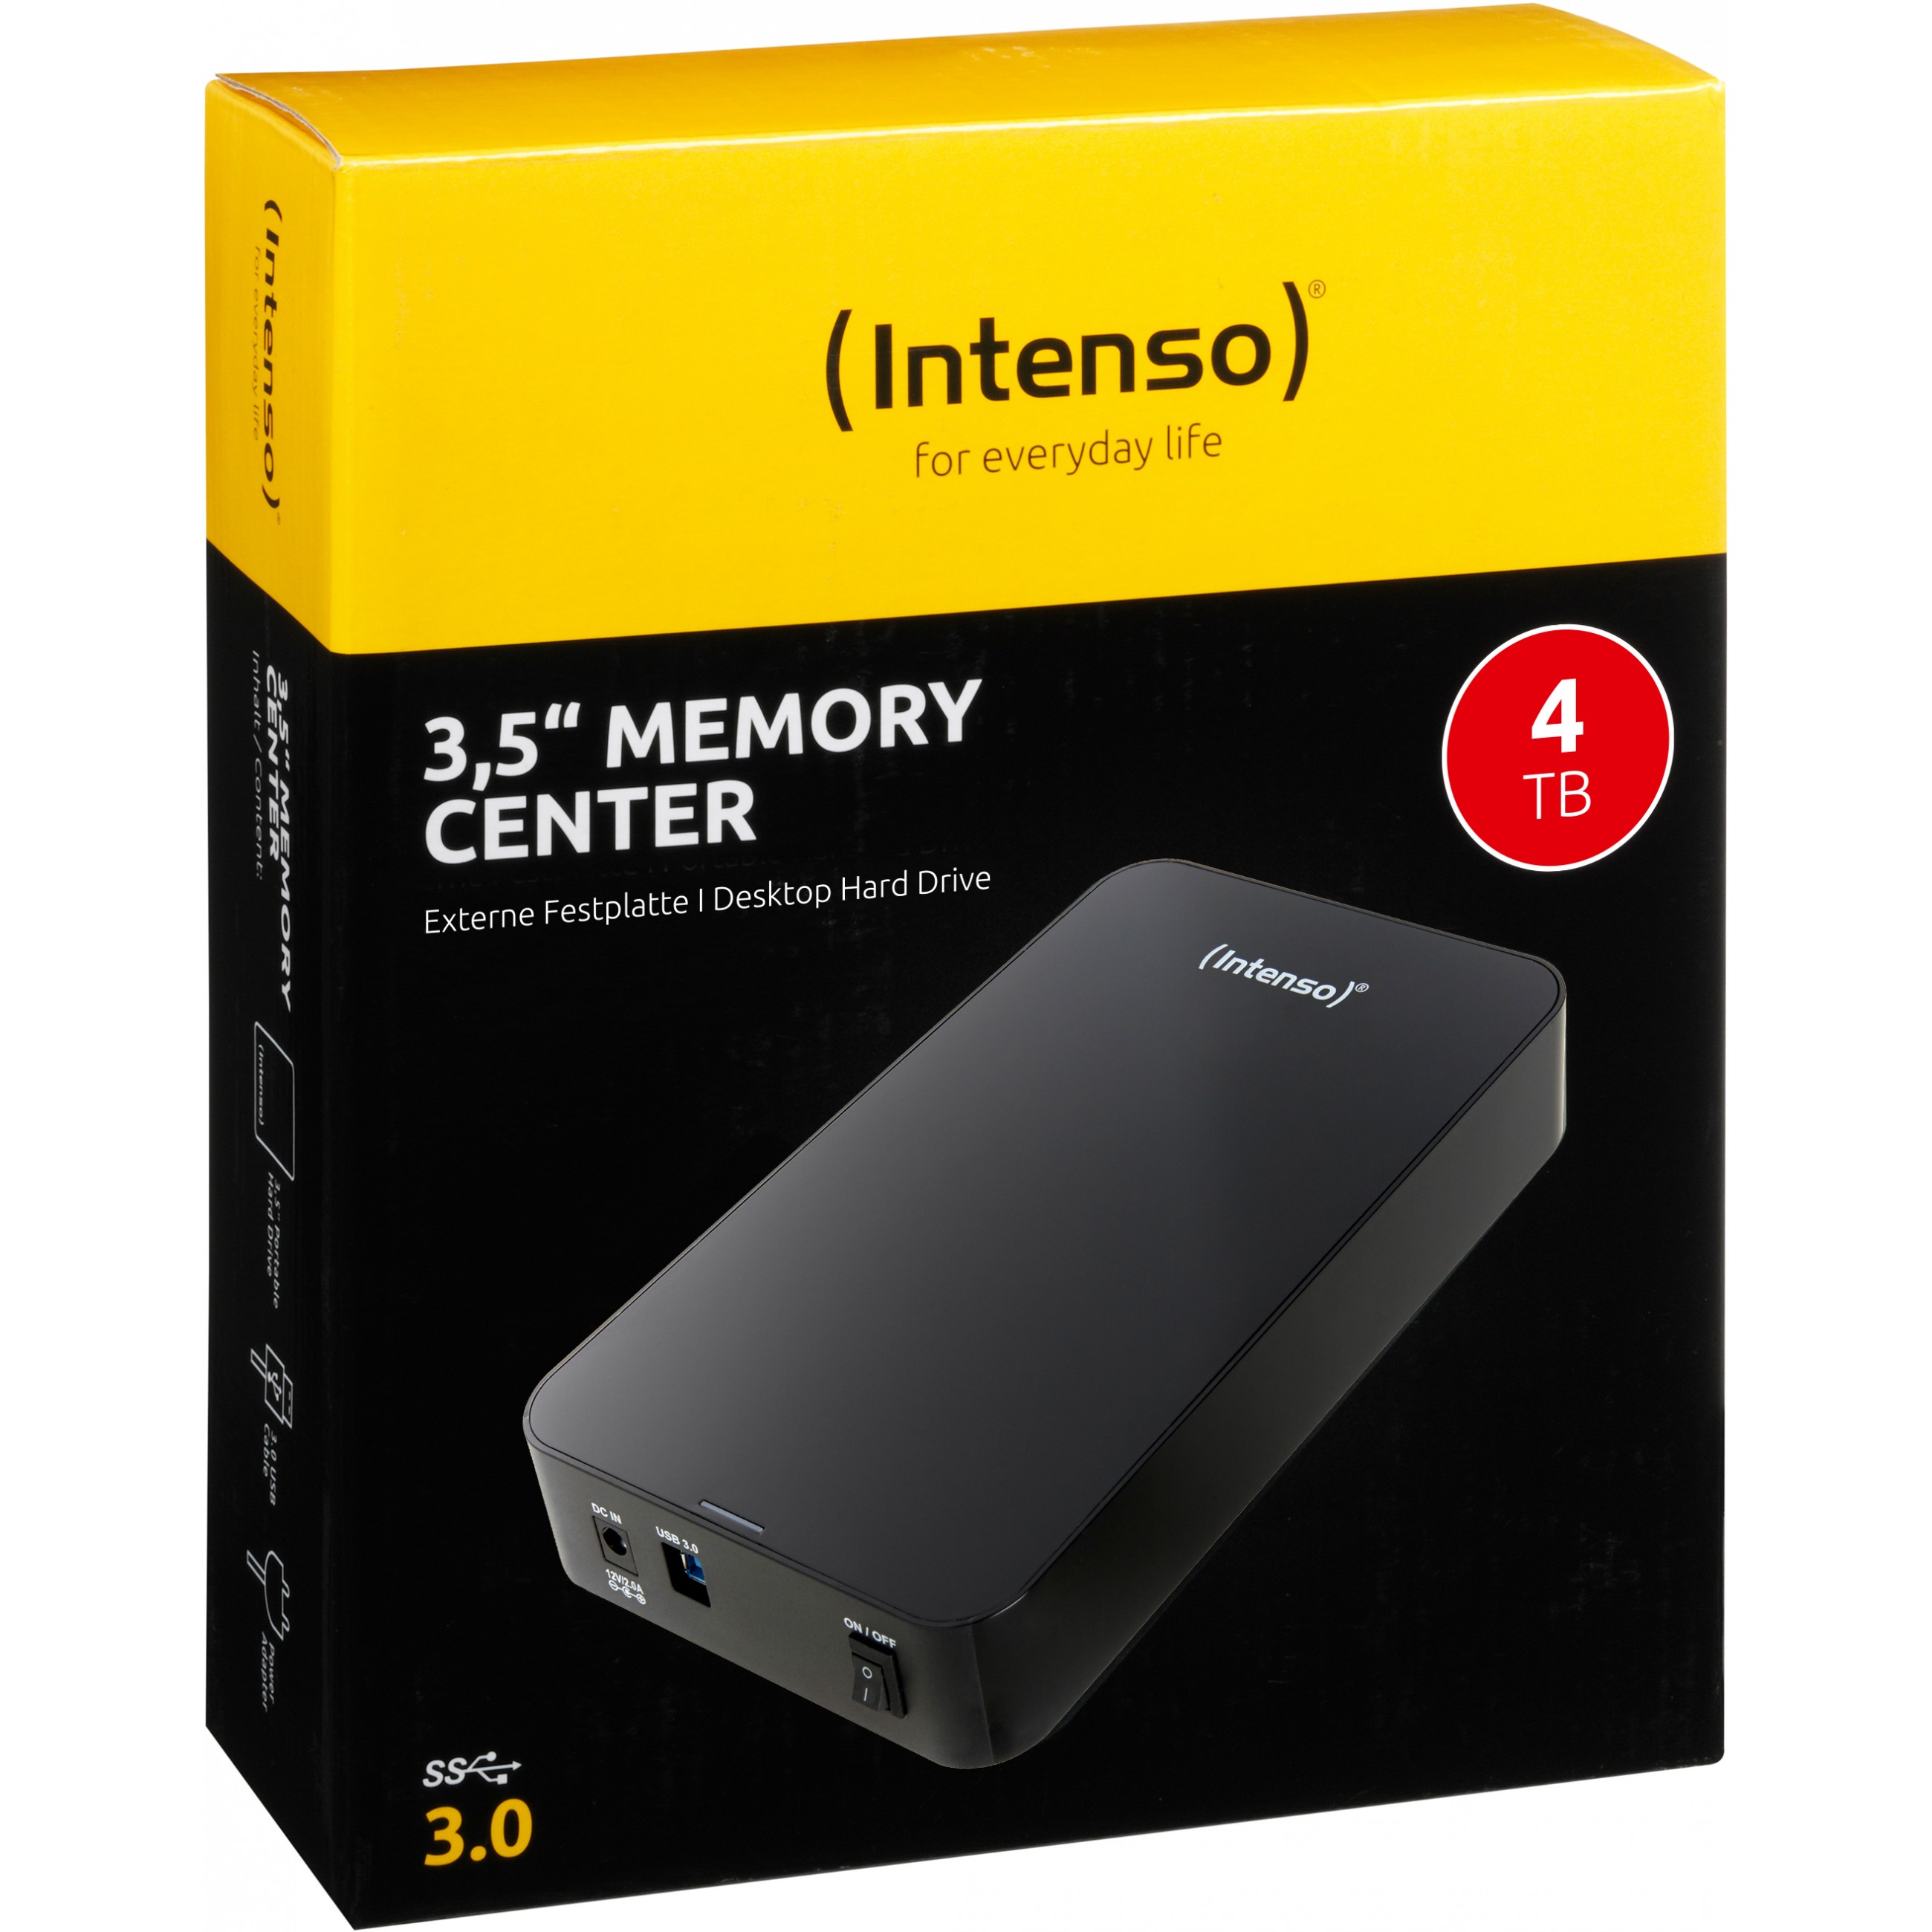 Intenso 3.5" Memory Center 4TB Externe Festplatte 4000 GB Schwarz